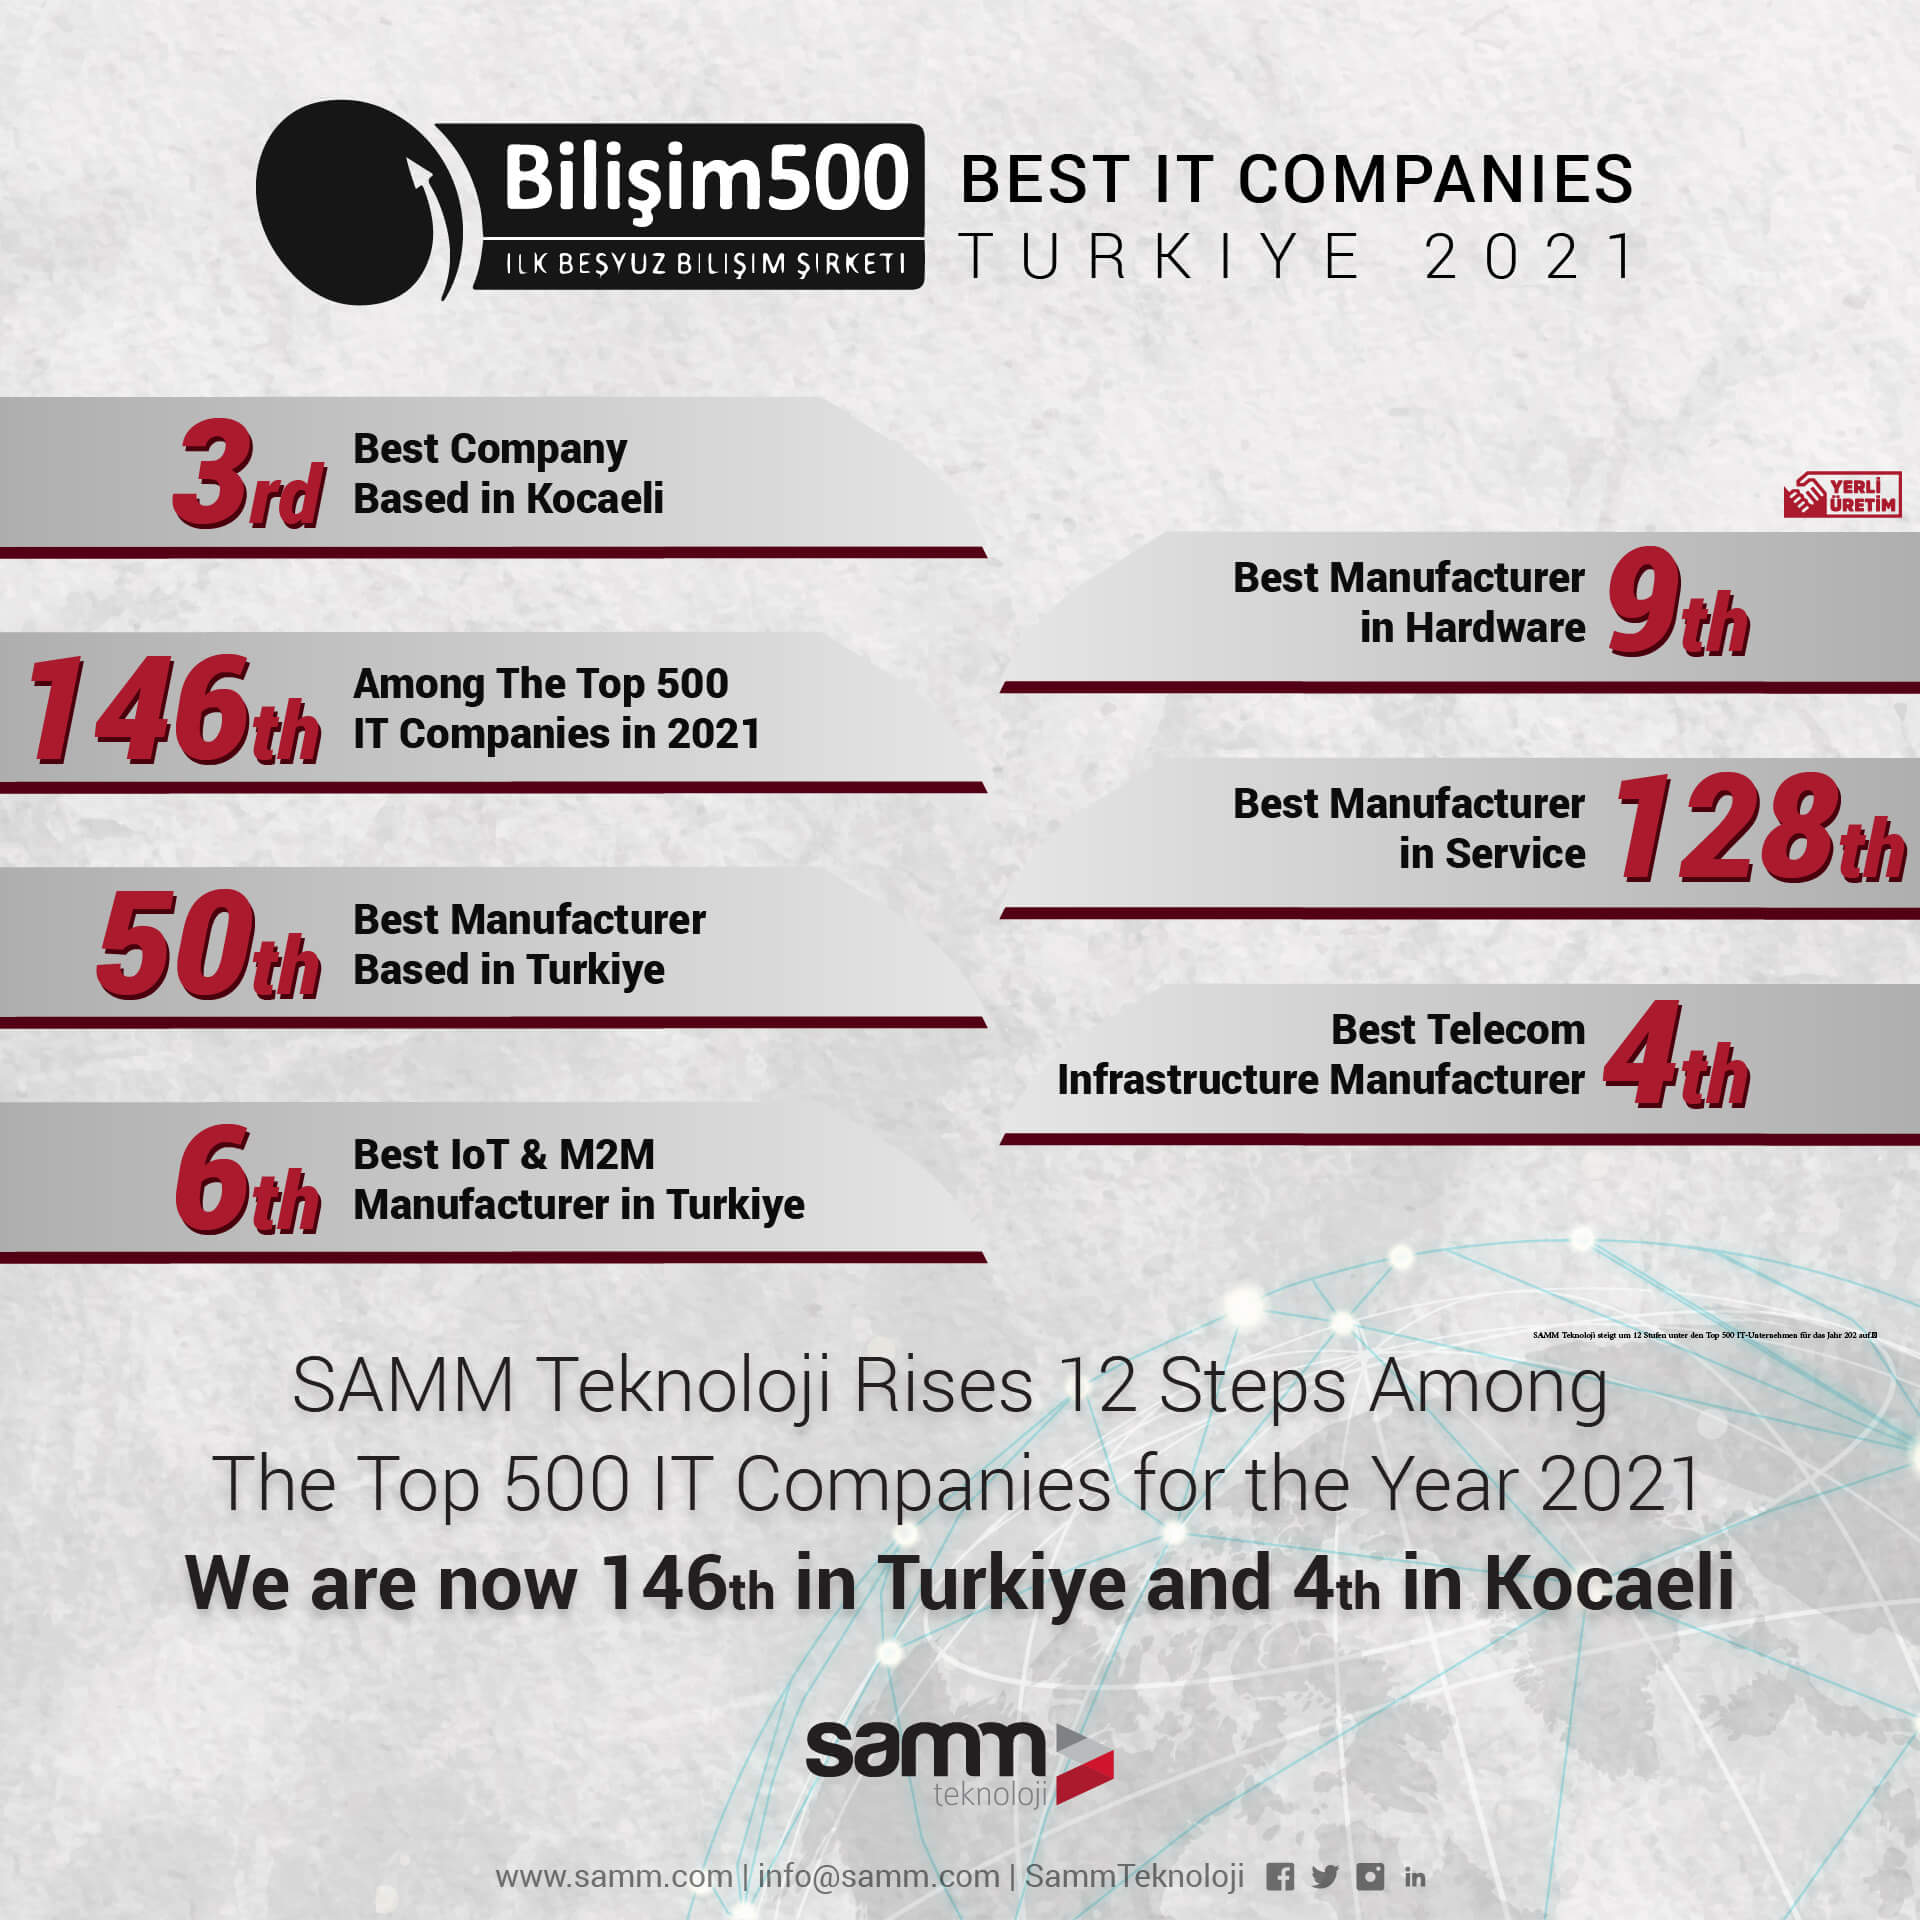 SAMM Teknoloji is Now 3rd Among Top IT Companies in Kocaeli